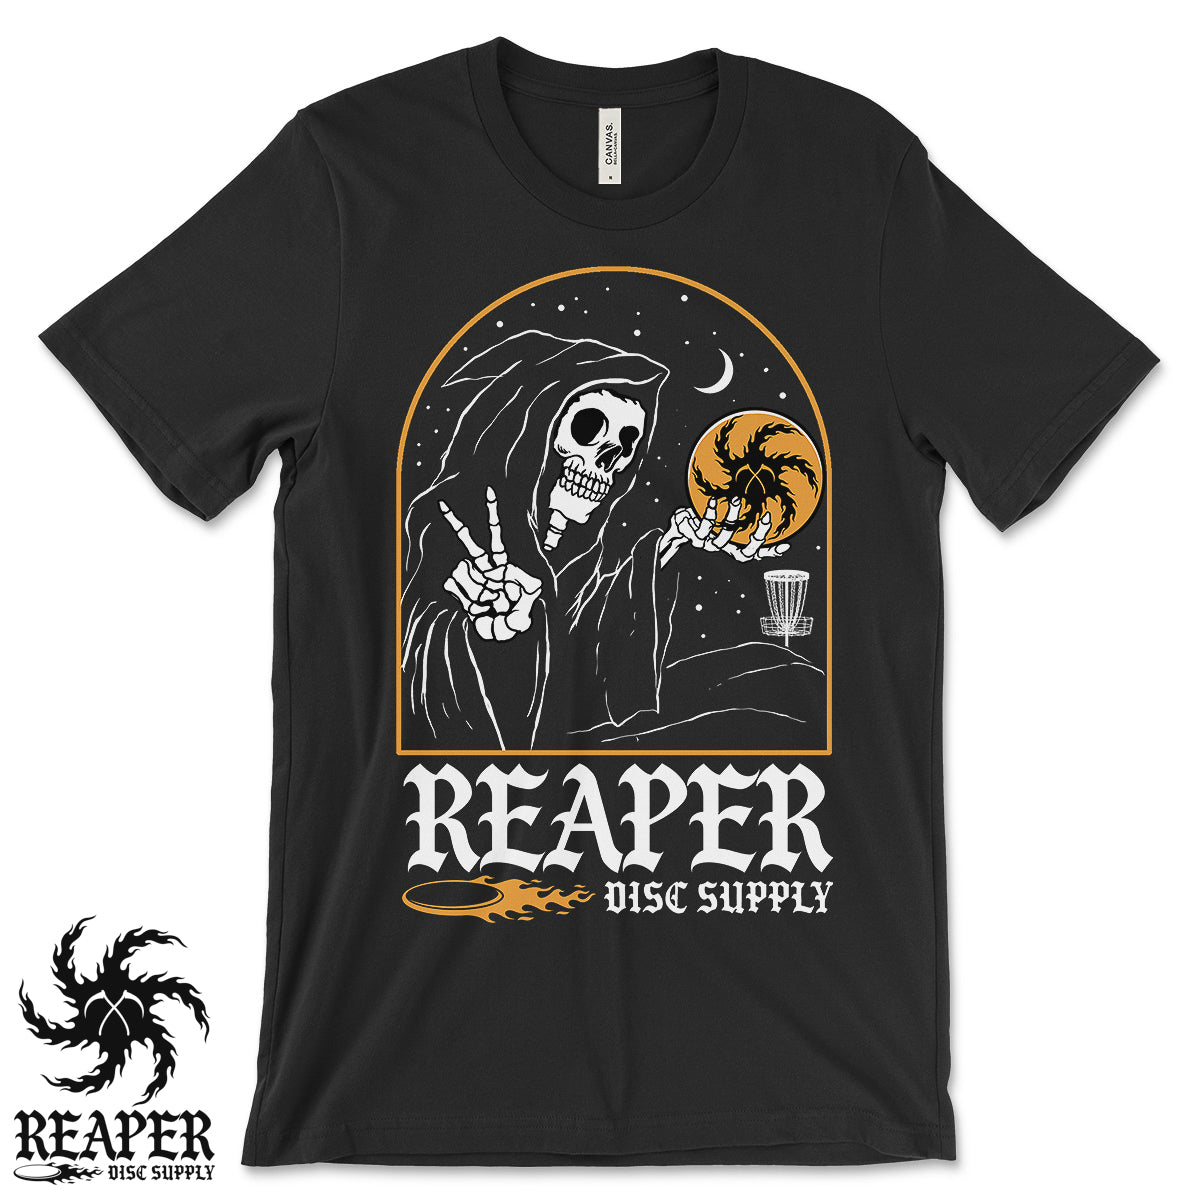 Grim Reaper T-Shirt - Black